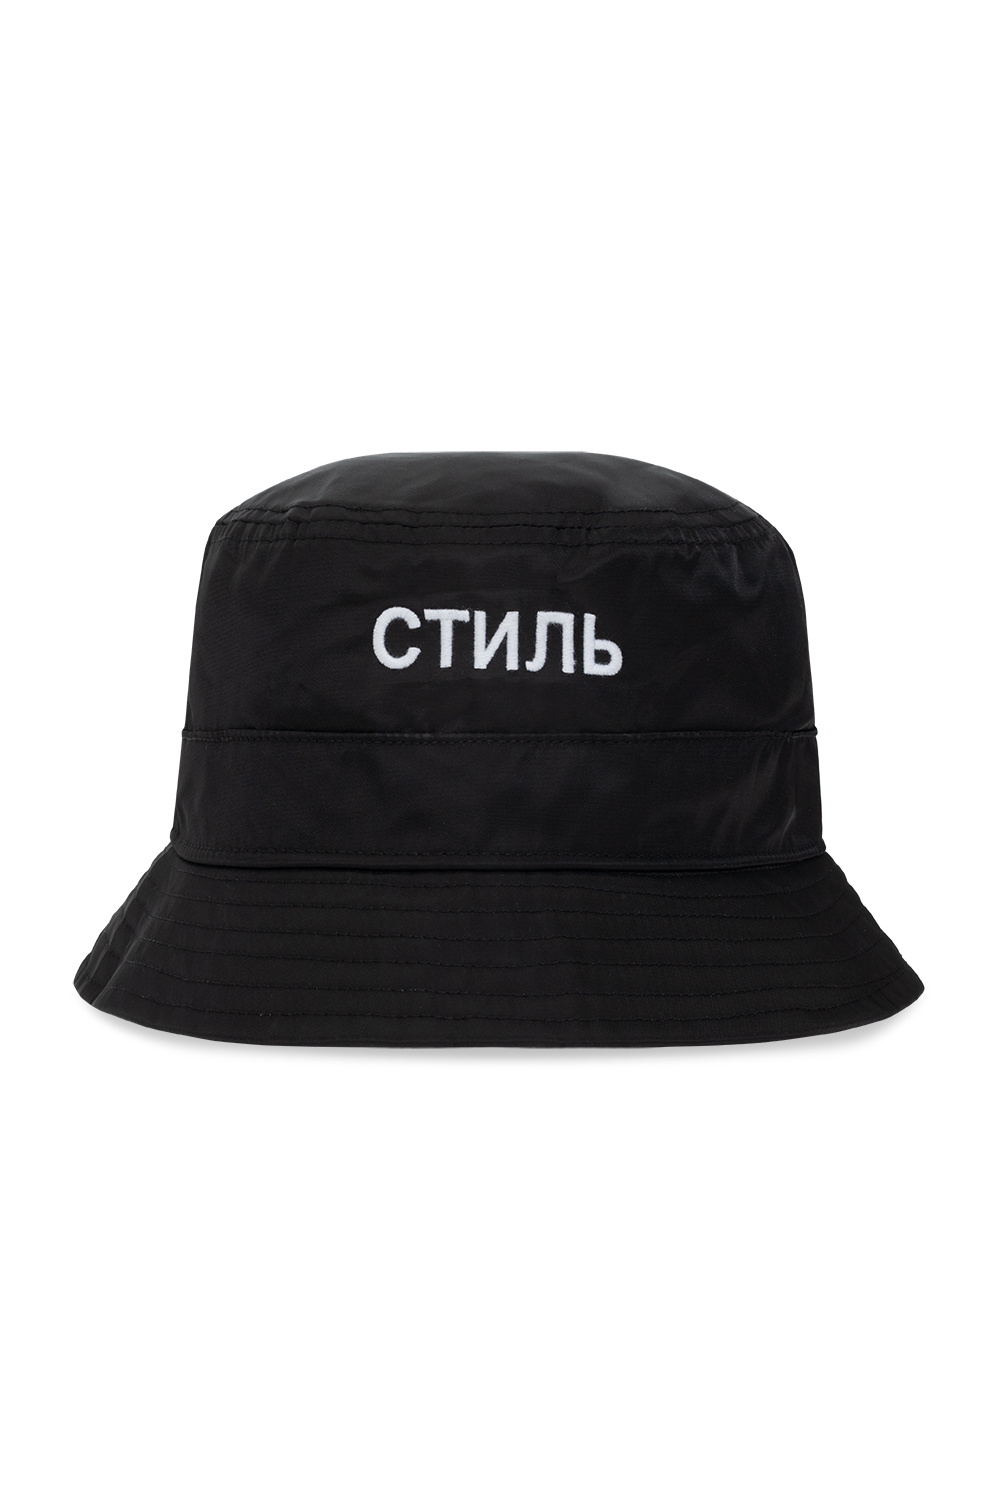 Biname-fmedShops | Lonsdale Wigston Cap | Heron Preston Bucket hat with  logo | Men's Accessories